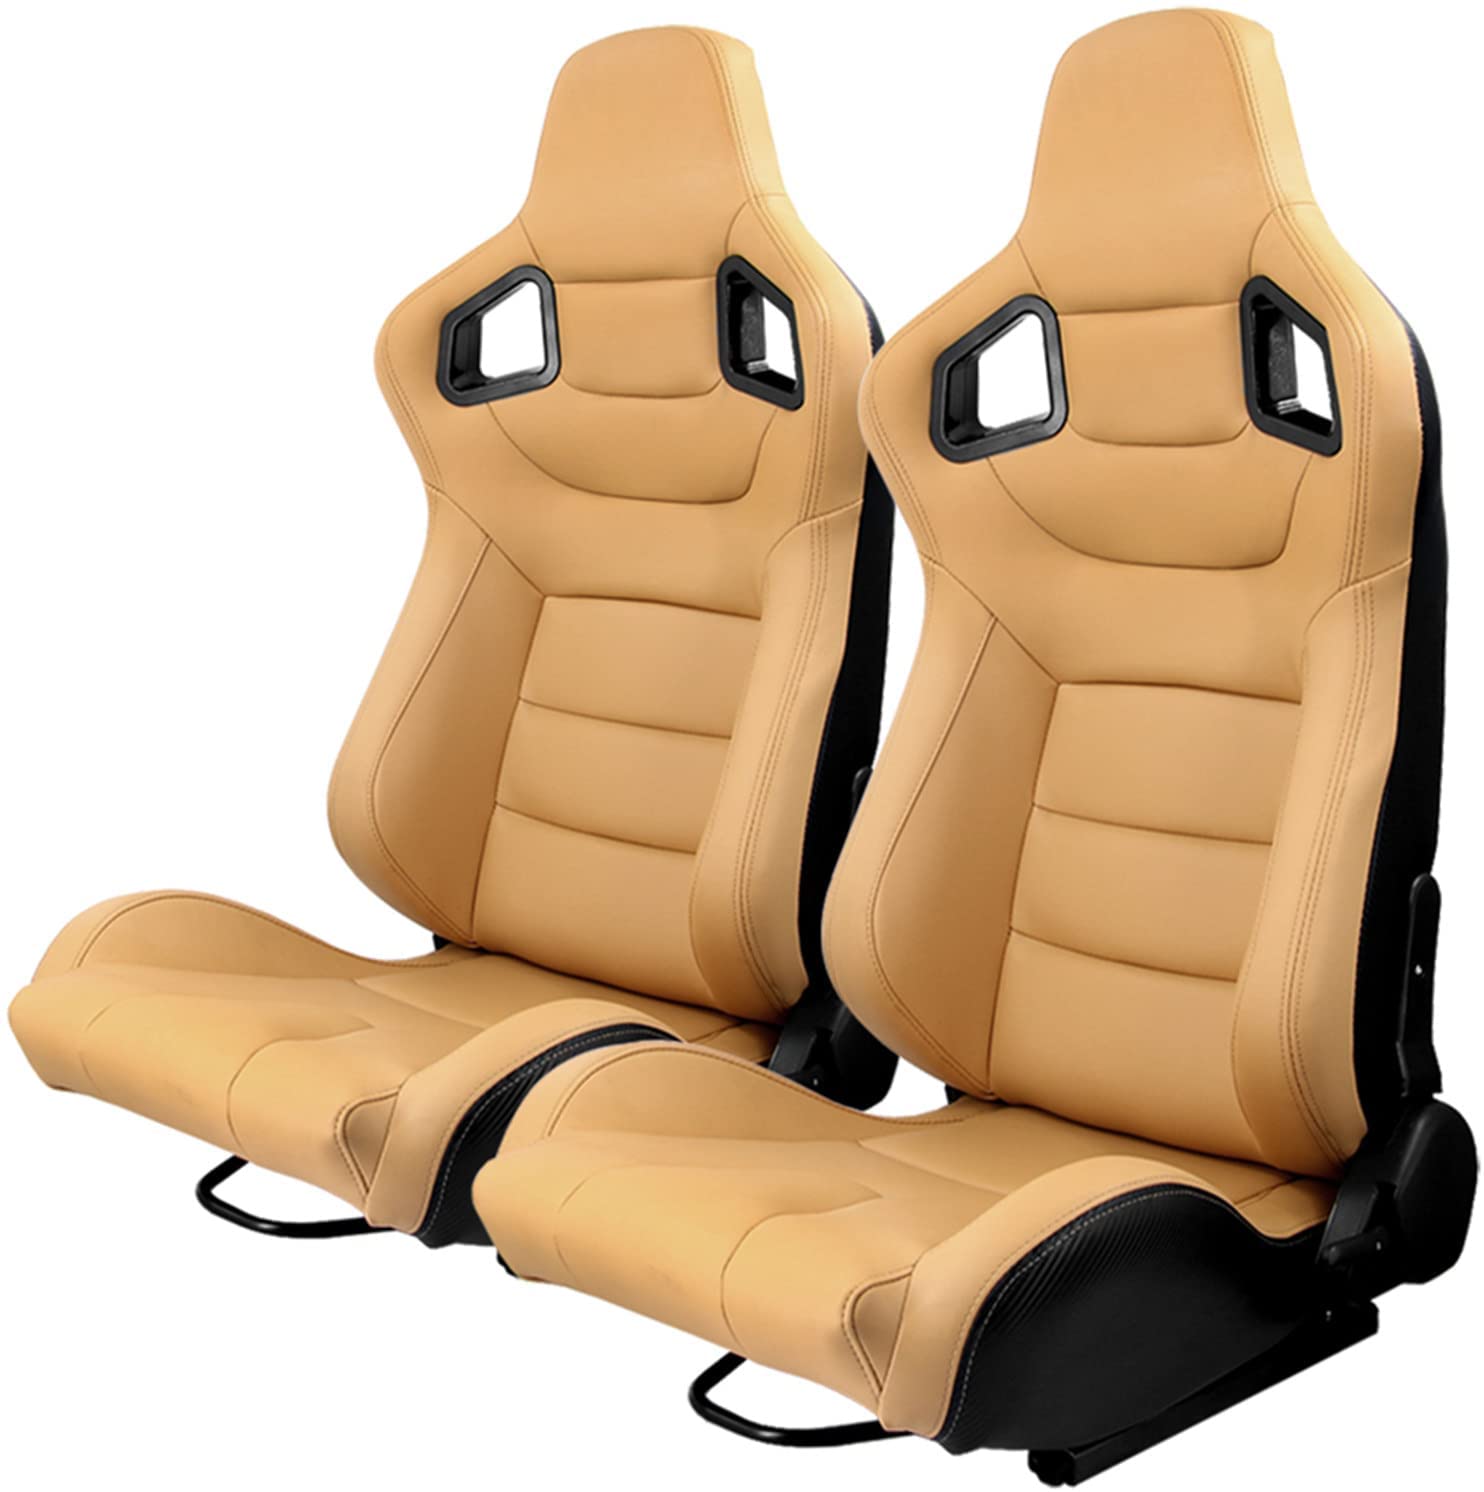 LIMEIDM Car Seat Sport Seat Bucket Seat Racing Seat Half Shell Seat Racing Seat 2 Piece Set Sports Style Racing Seats Yellow